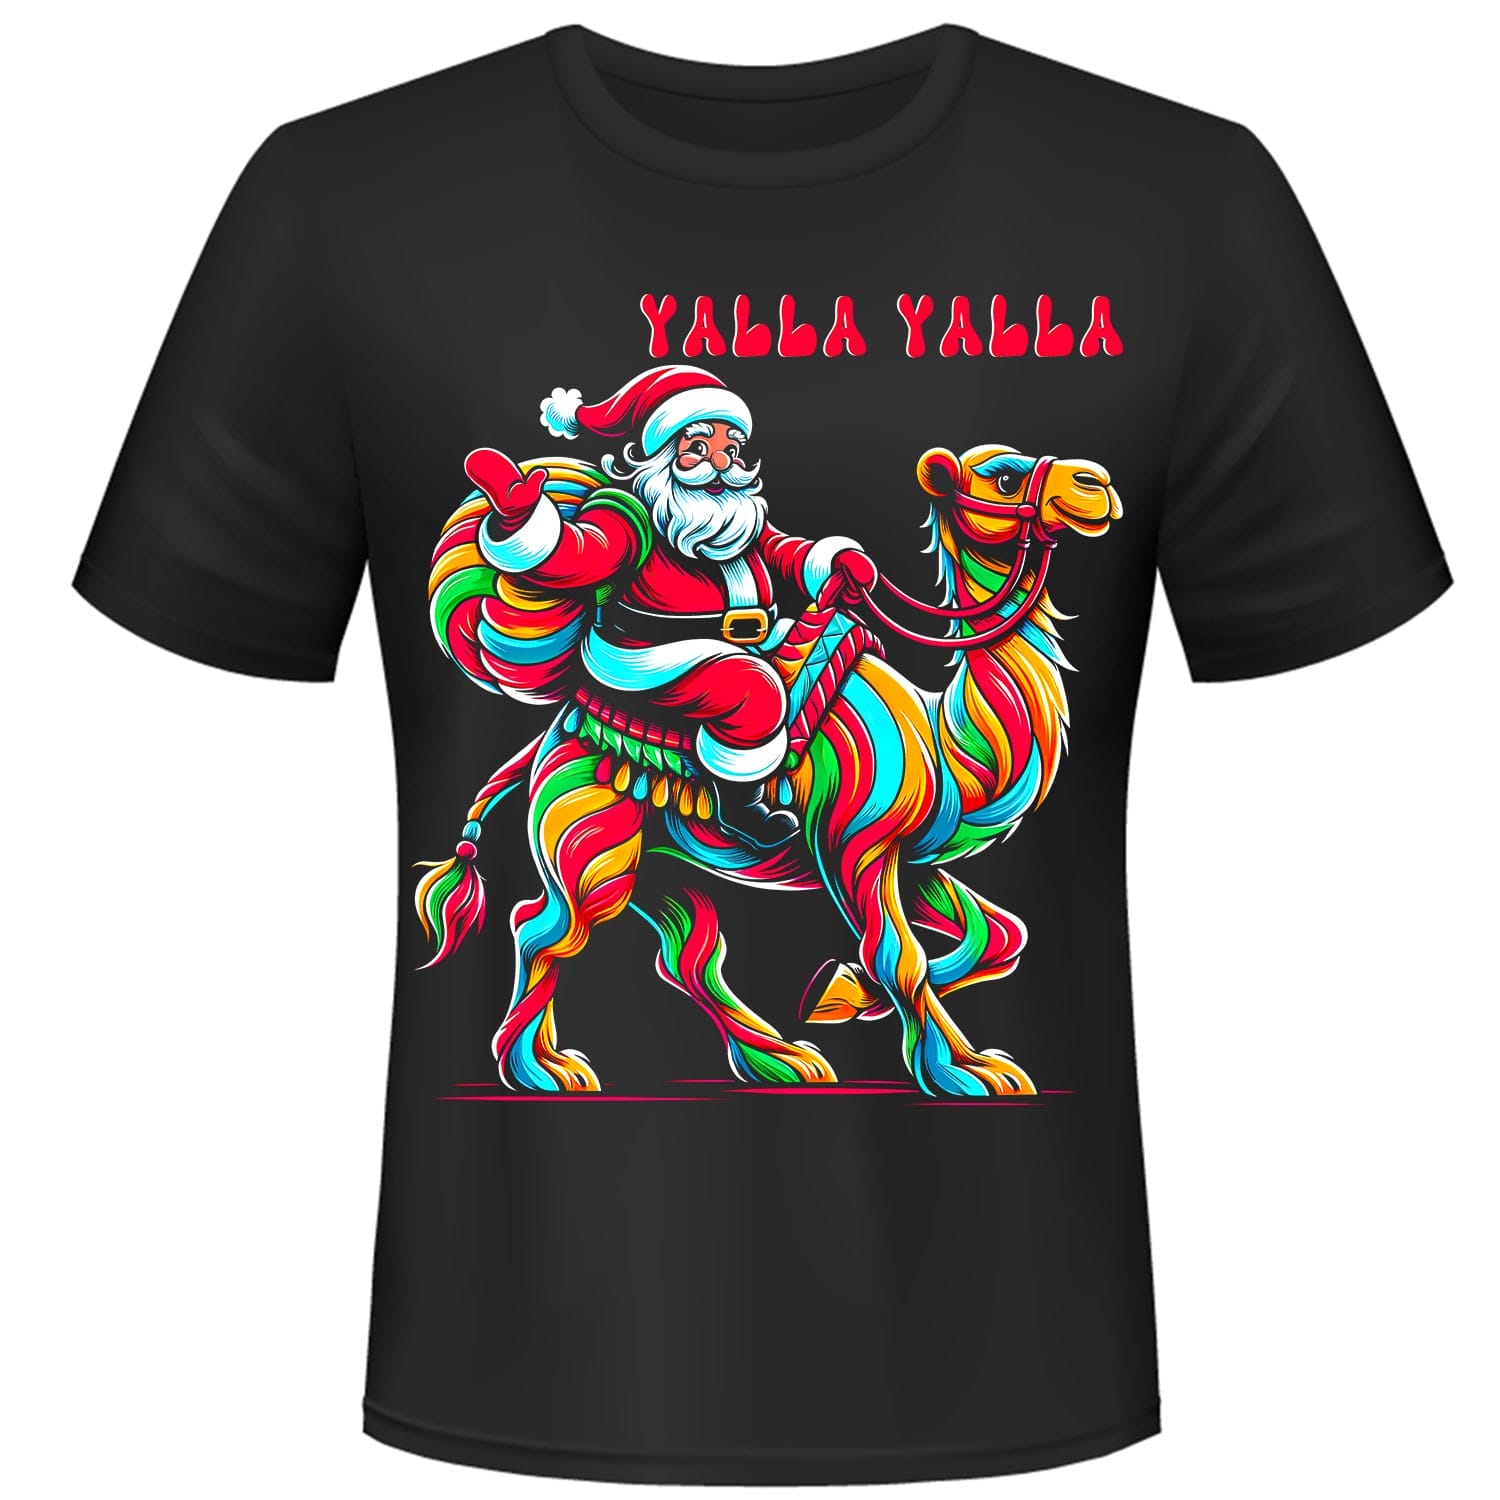 Santa On A Camel Saying Yalla Yalla funny t-shirt design